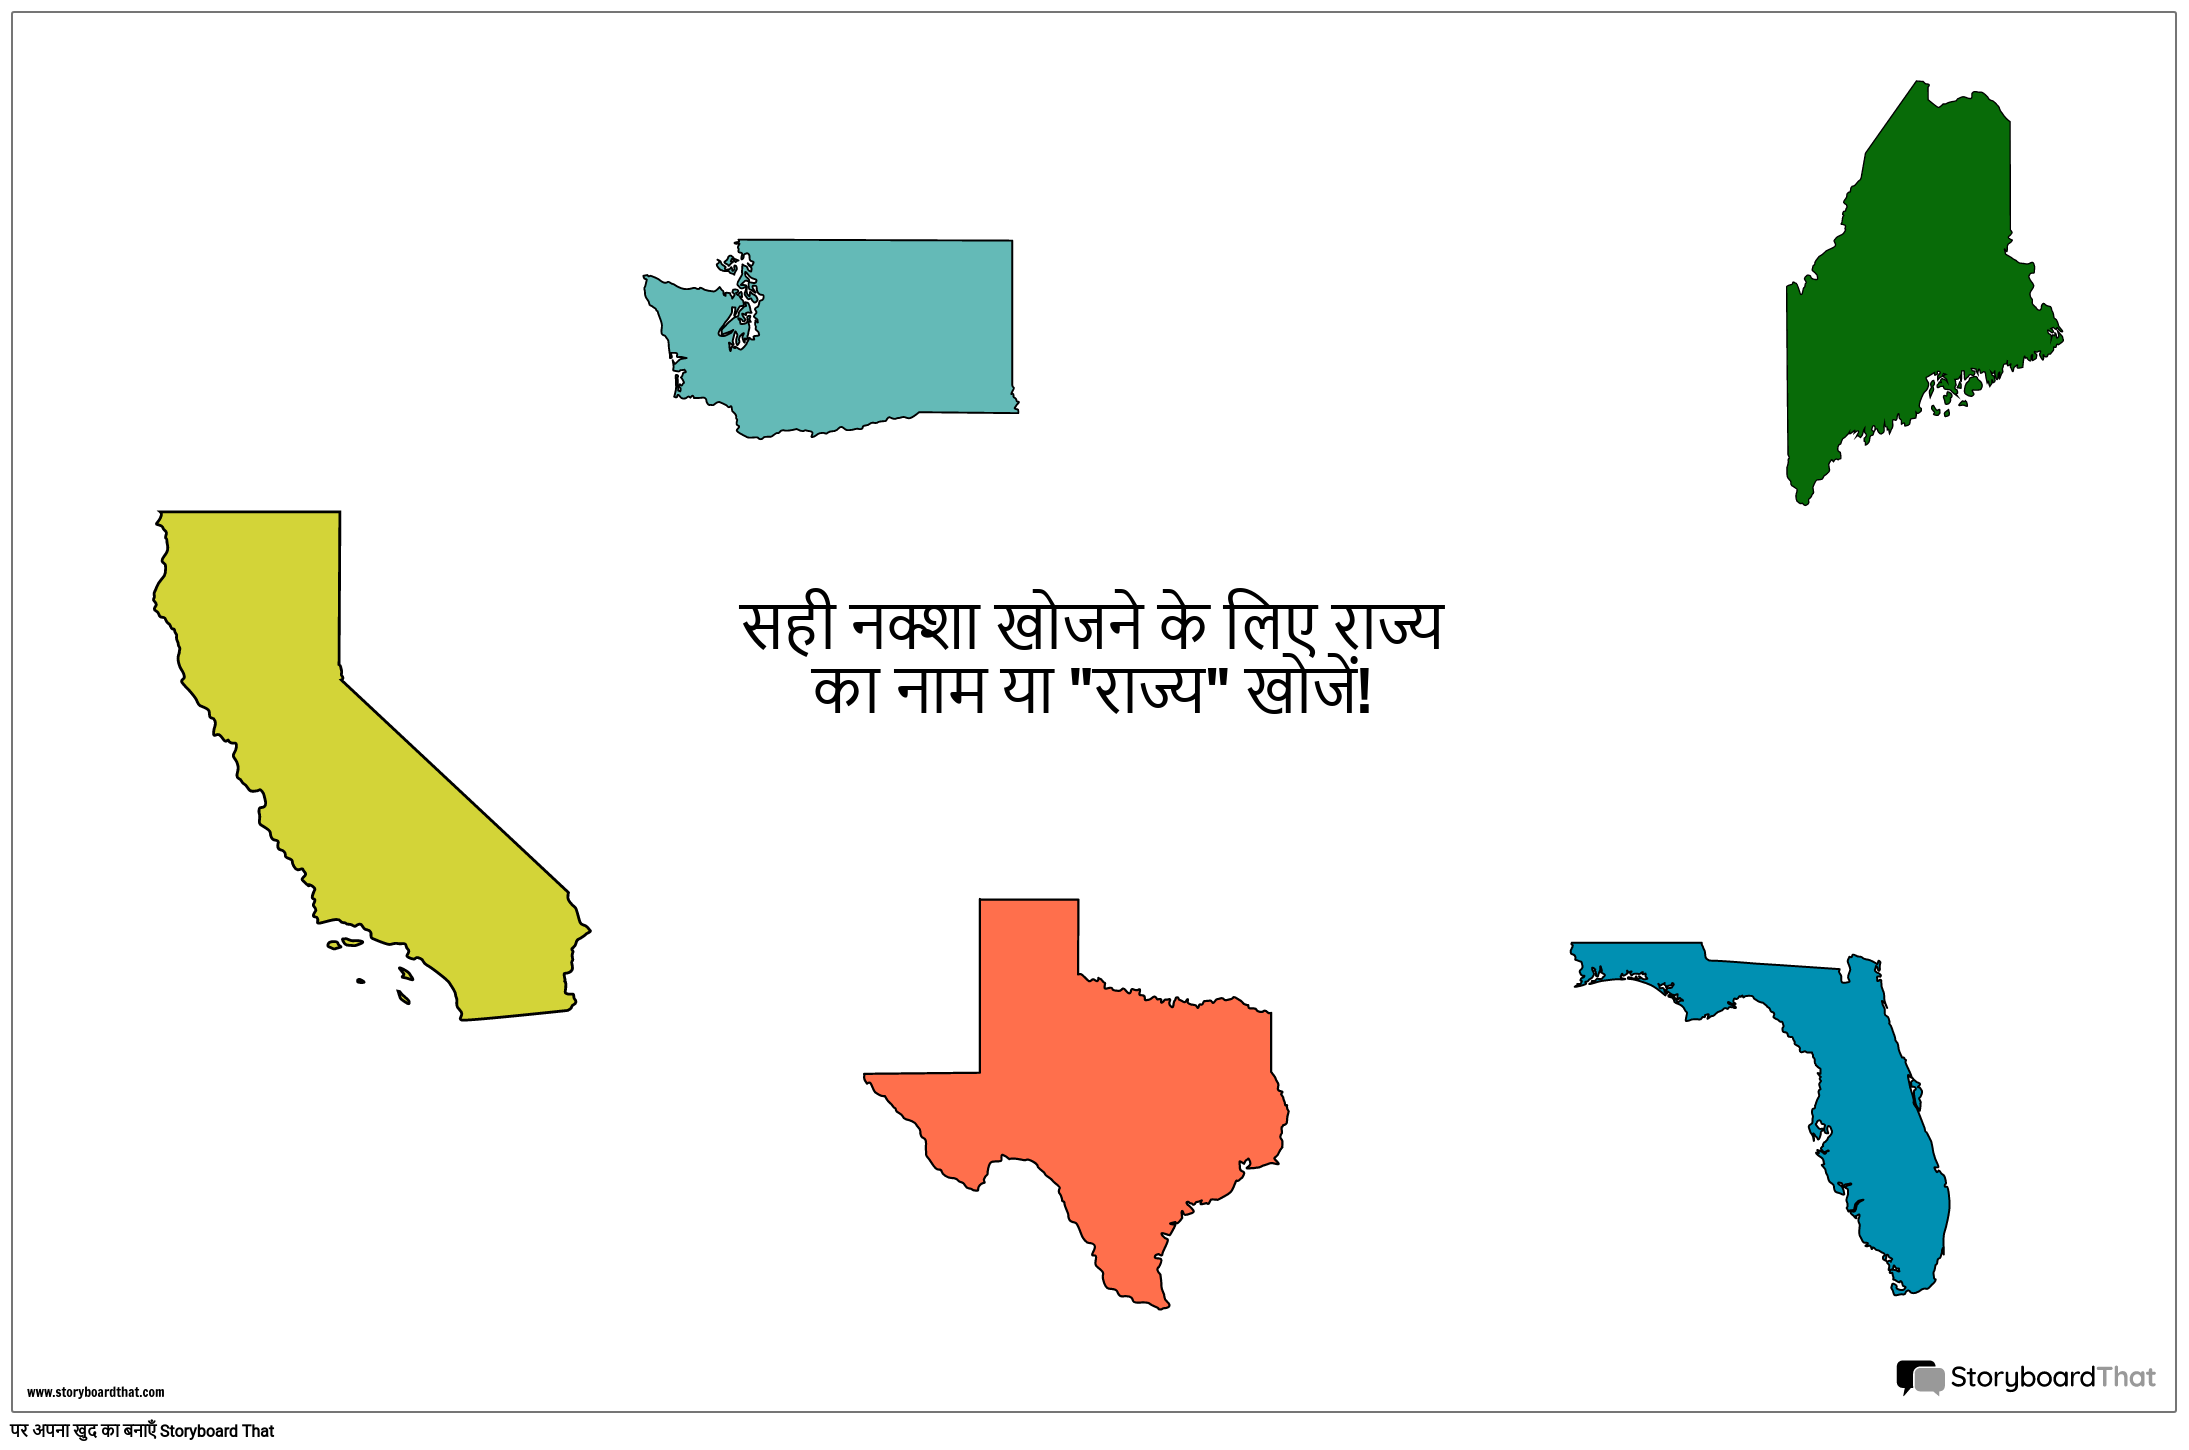 राज्य परियोजना मानचित्र टेम्पलेट